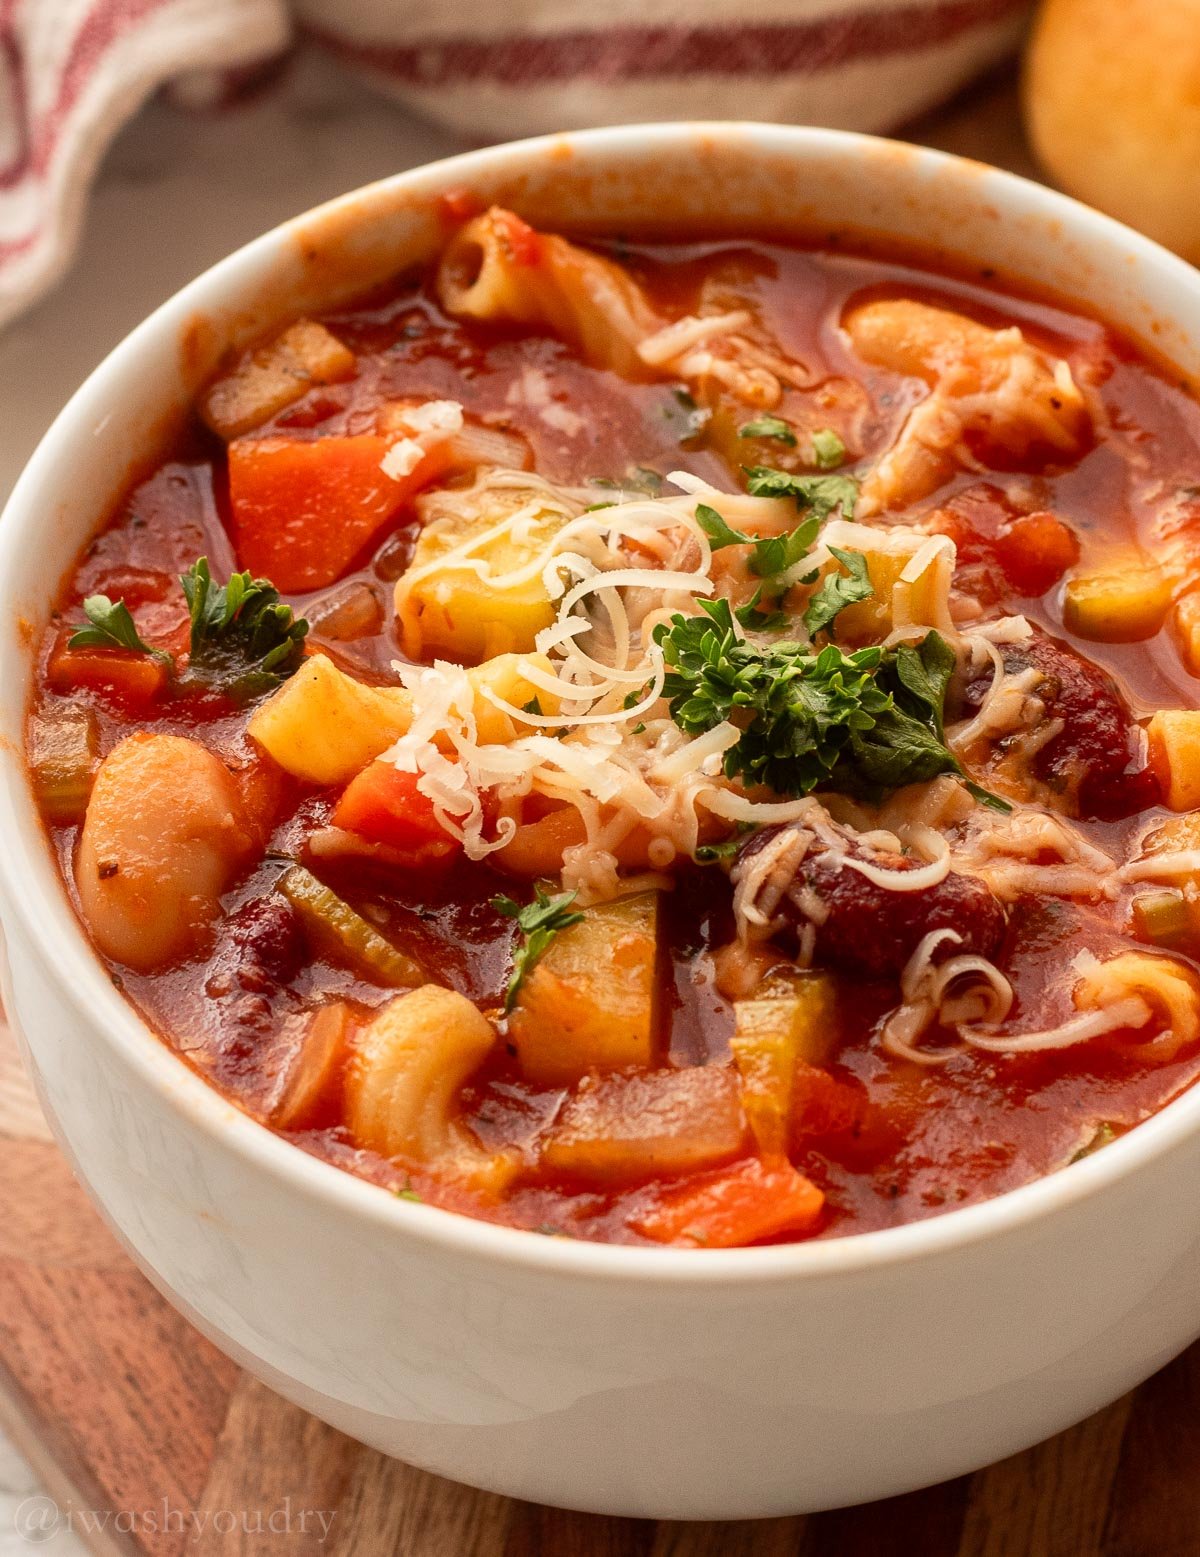 Recipe: Hearty Minestrone Soup